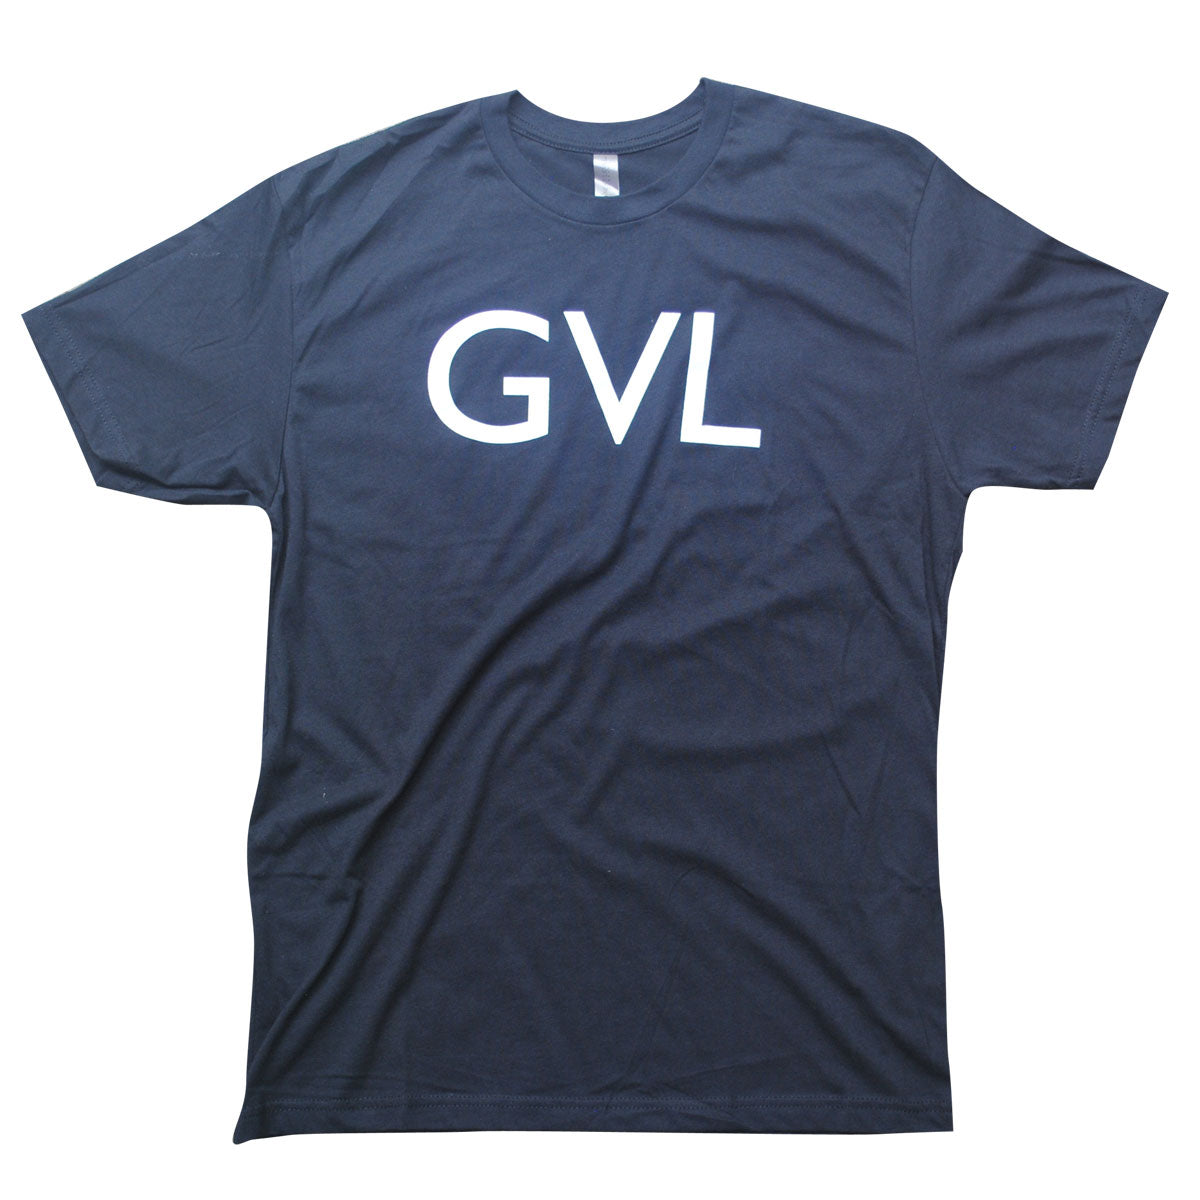 GVL "Greenville" Black T-shirt